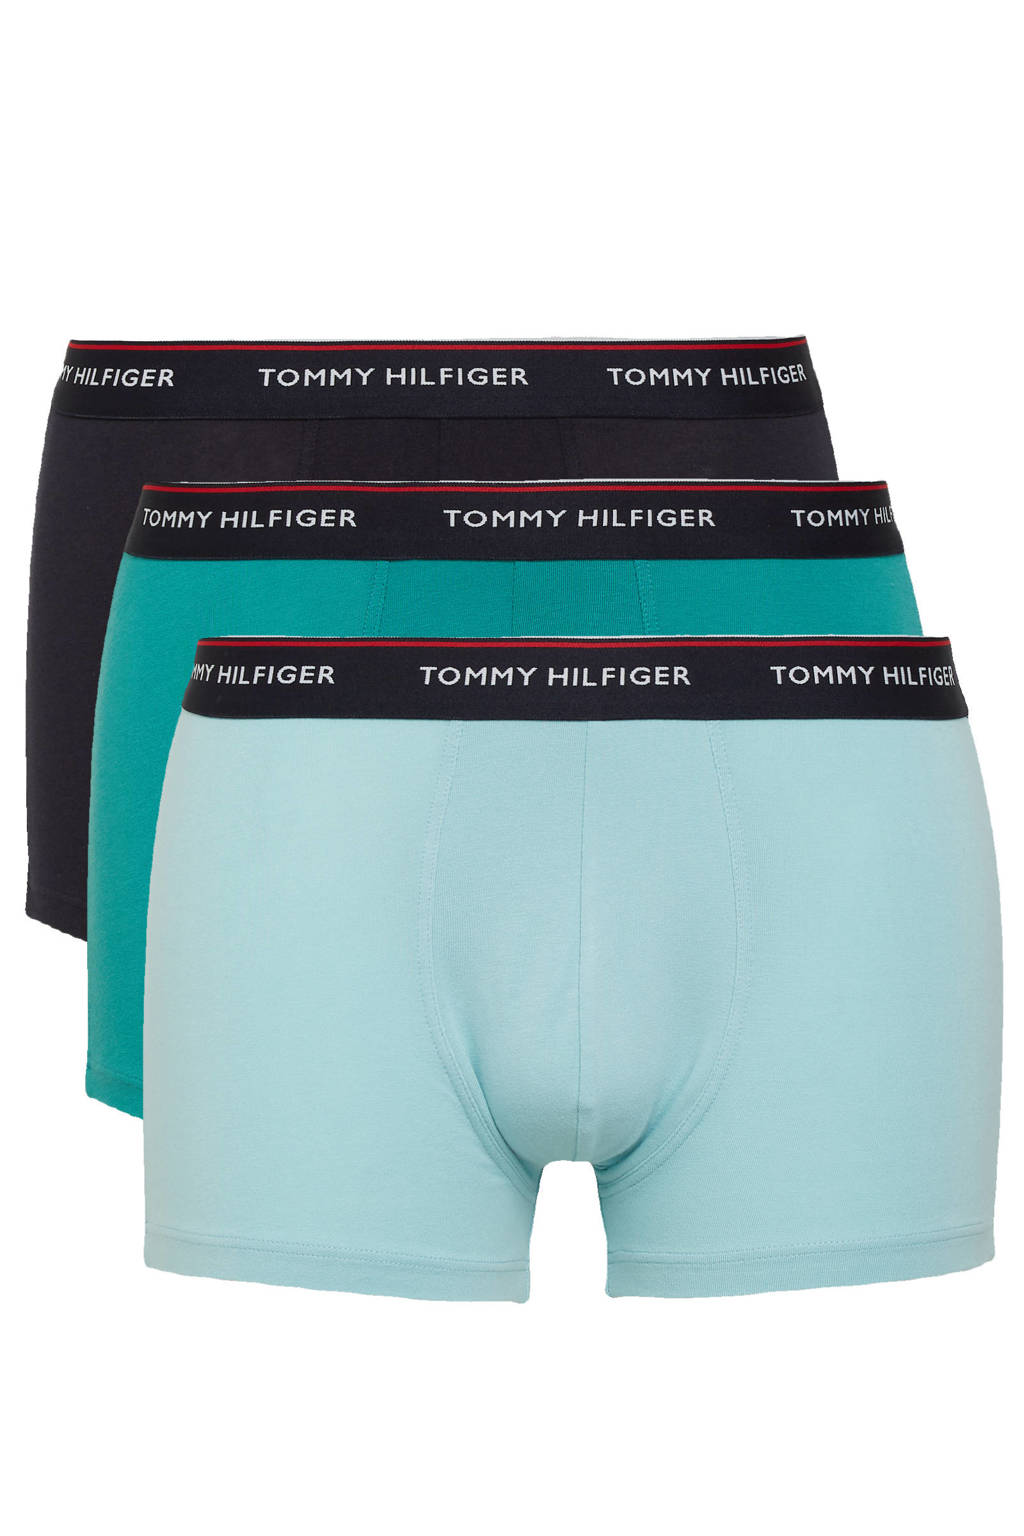 Tommy Hilfiger boxershort (set van 3), Donkerblauw/petrol/turquoise